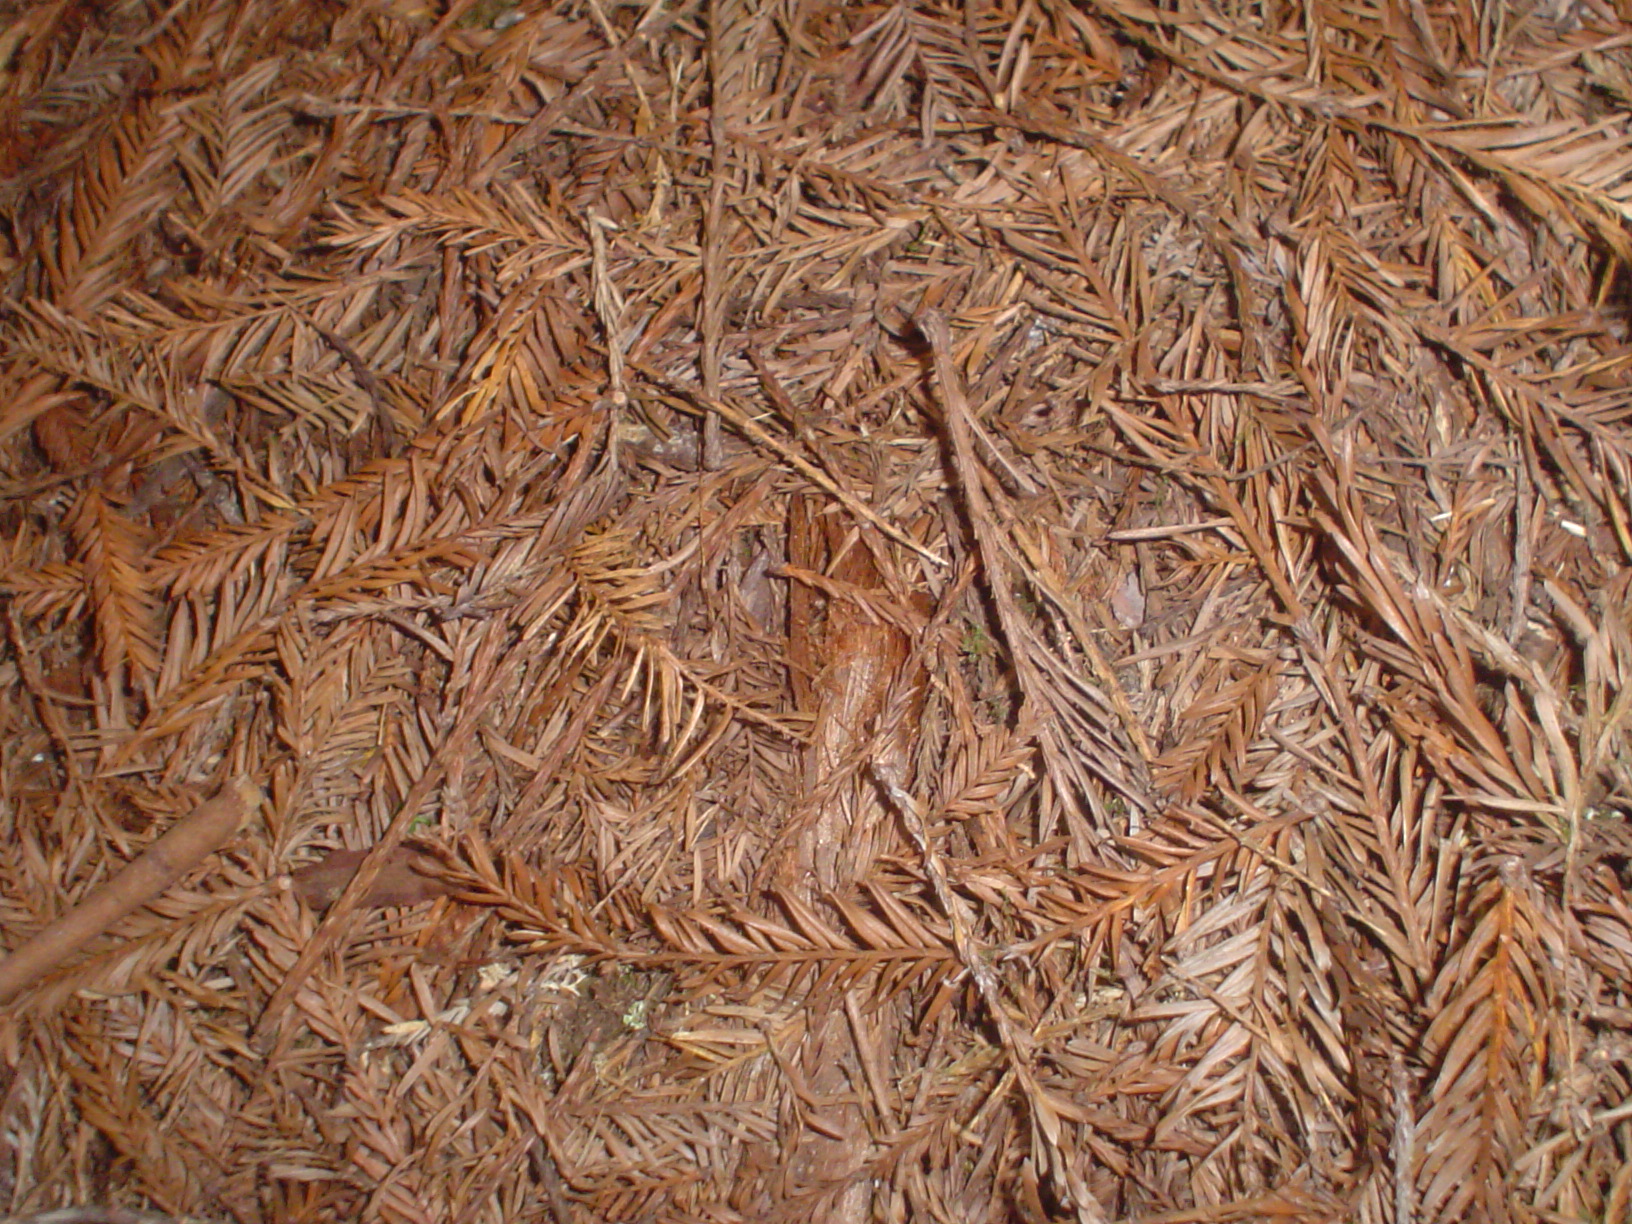 Pine needles-texture by Lill-stock on DeviantArt